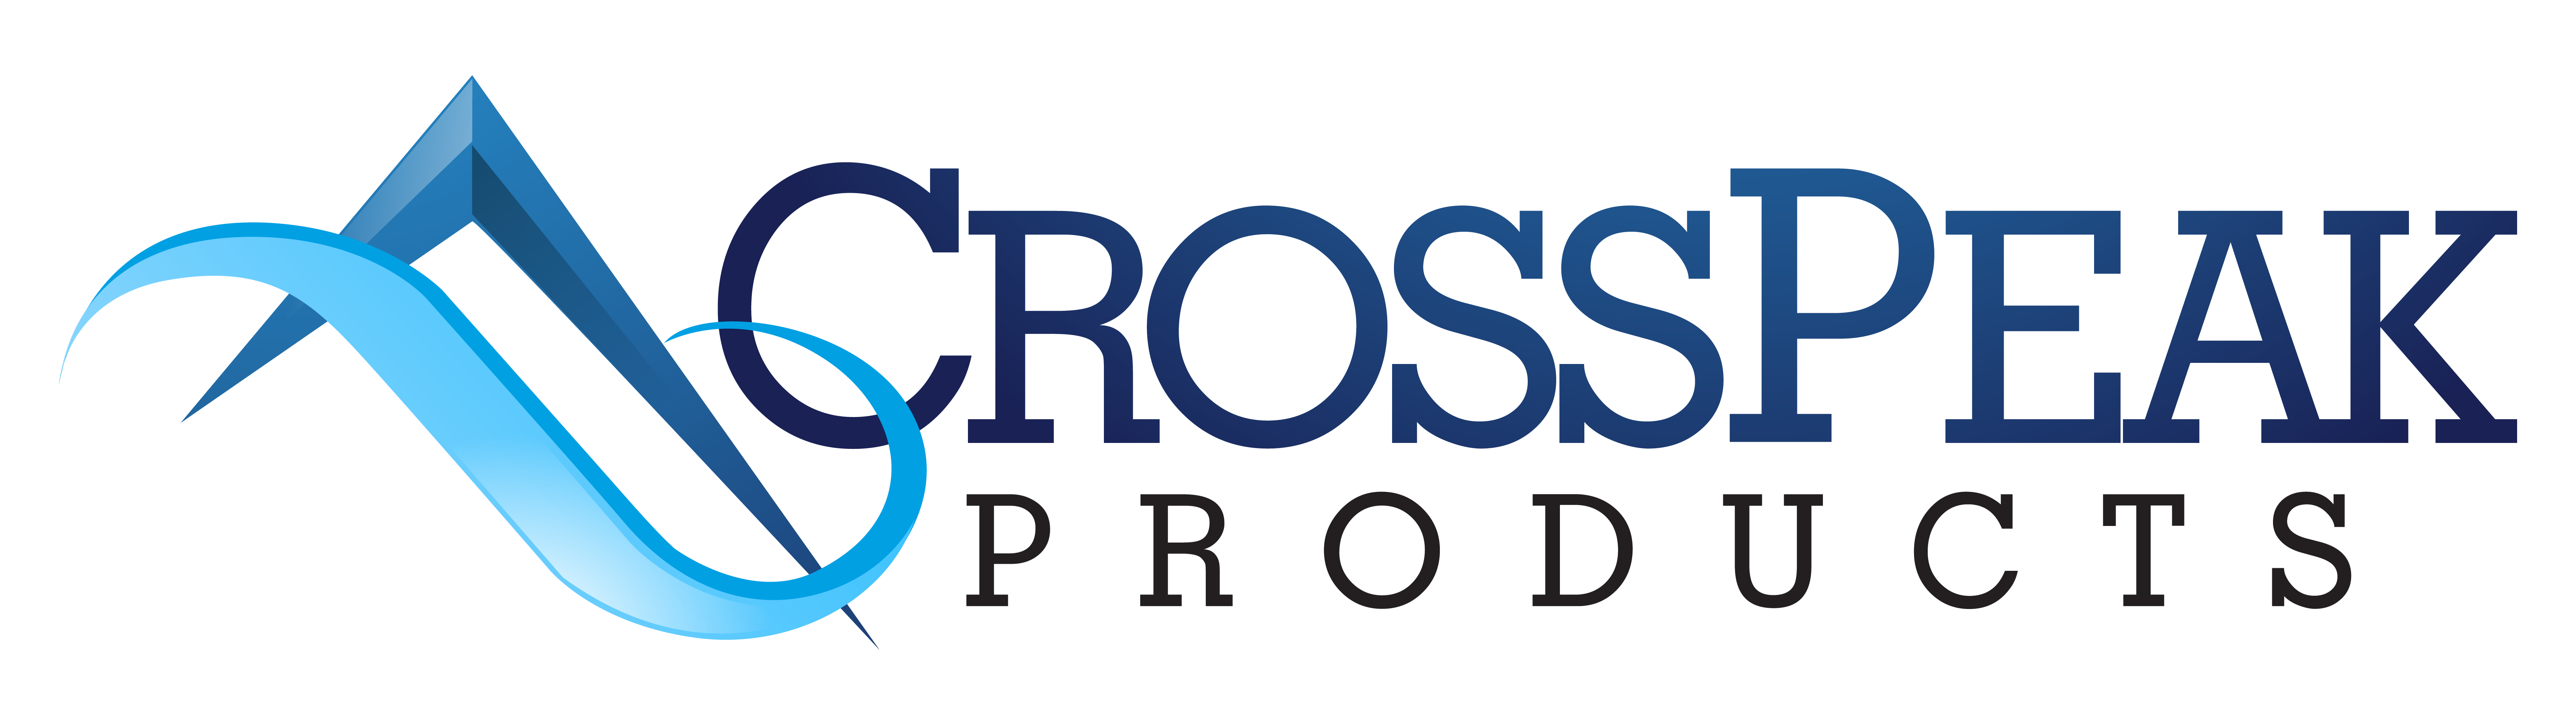 Cross Peak Products